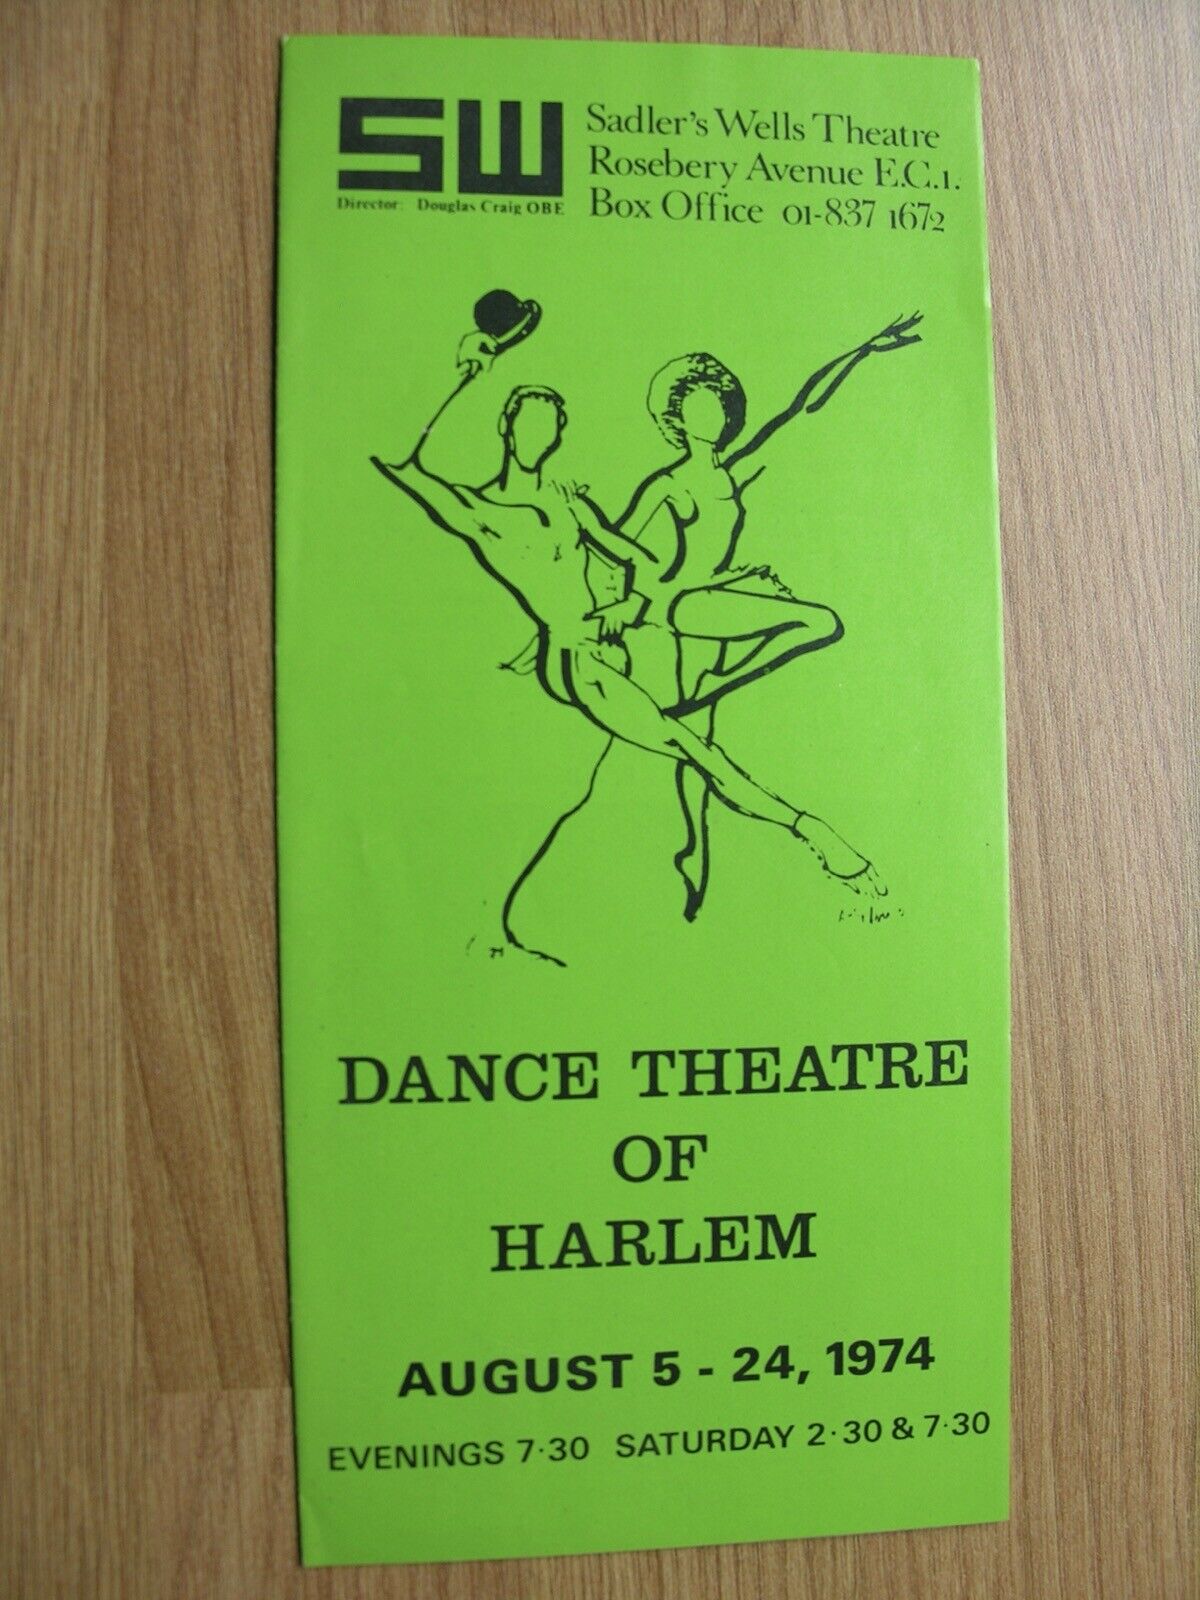 1974 DANCE THEATRE OF HARLEM Arthur Mitchell Booking Form Sadler’s Wells Theatre